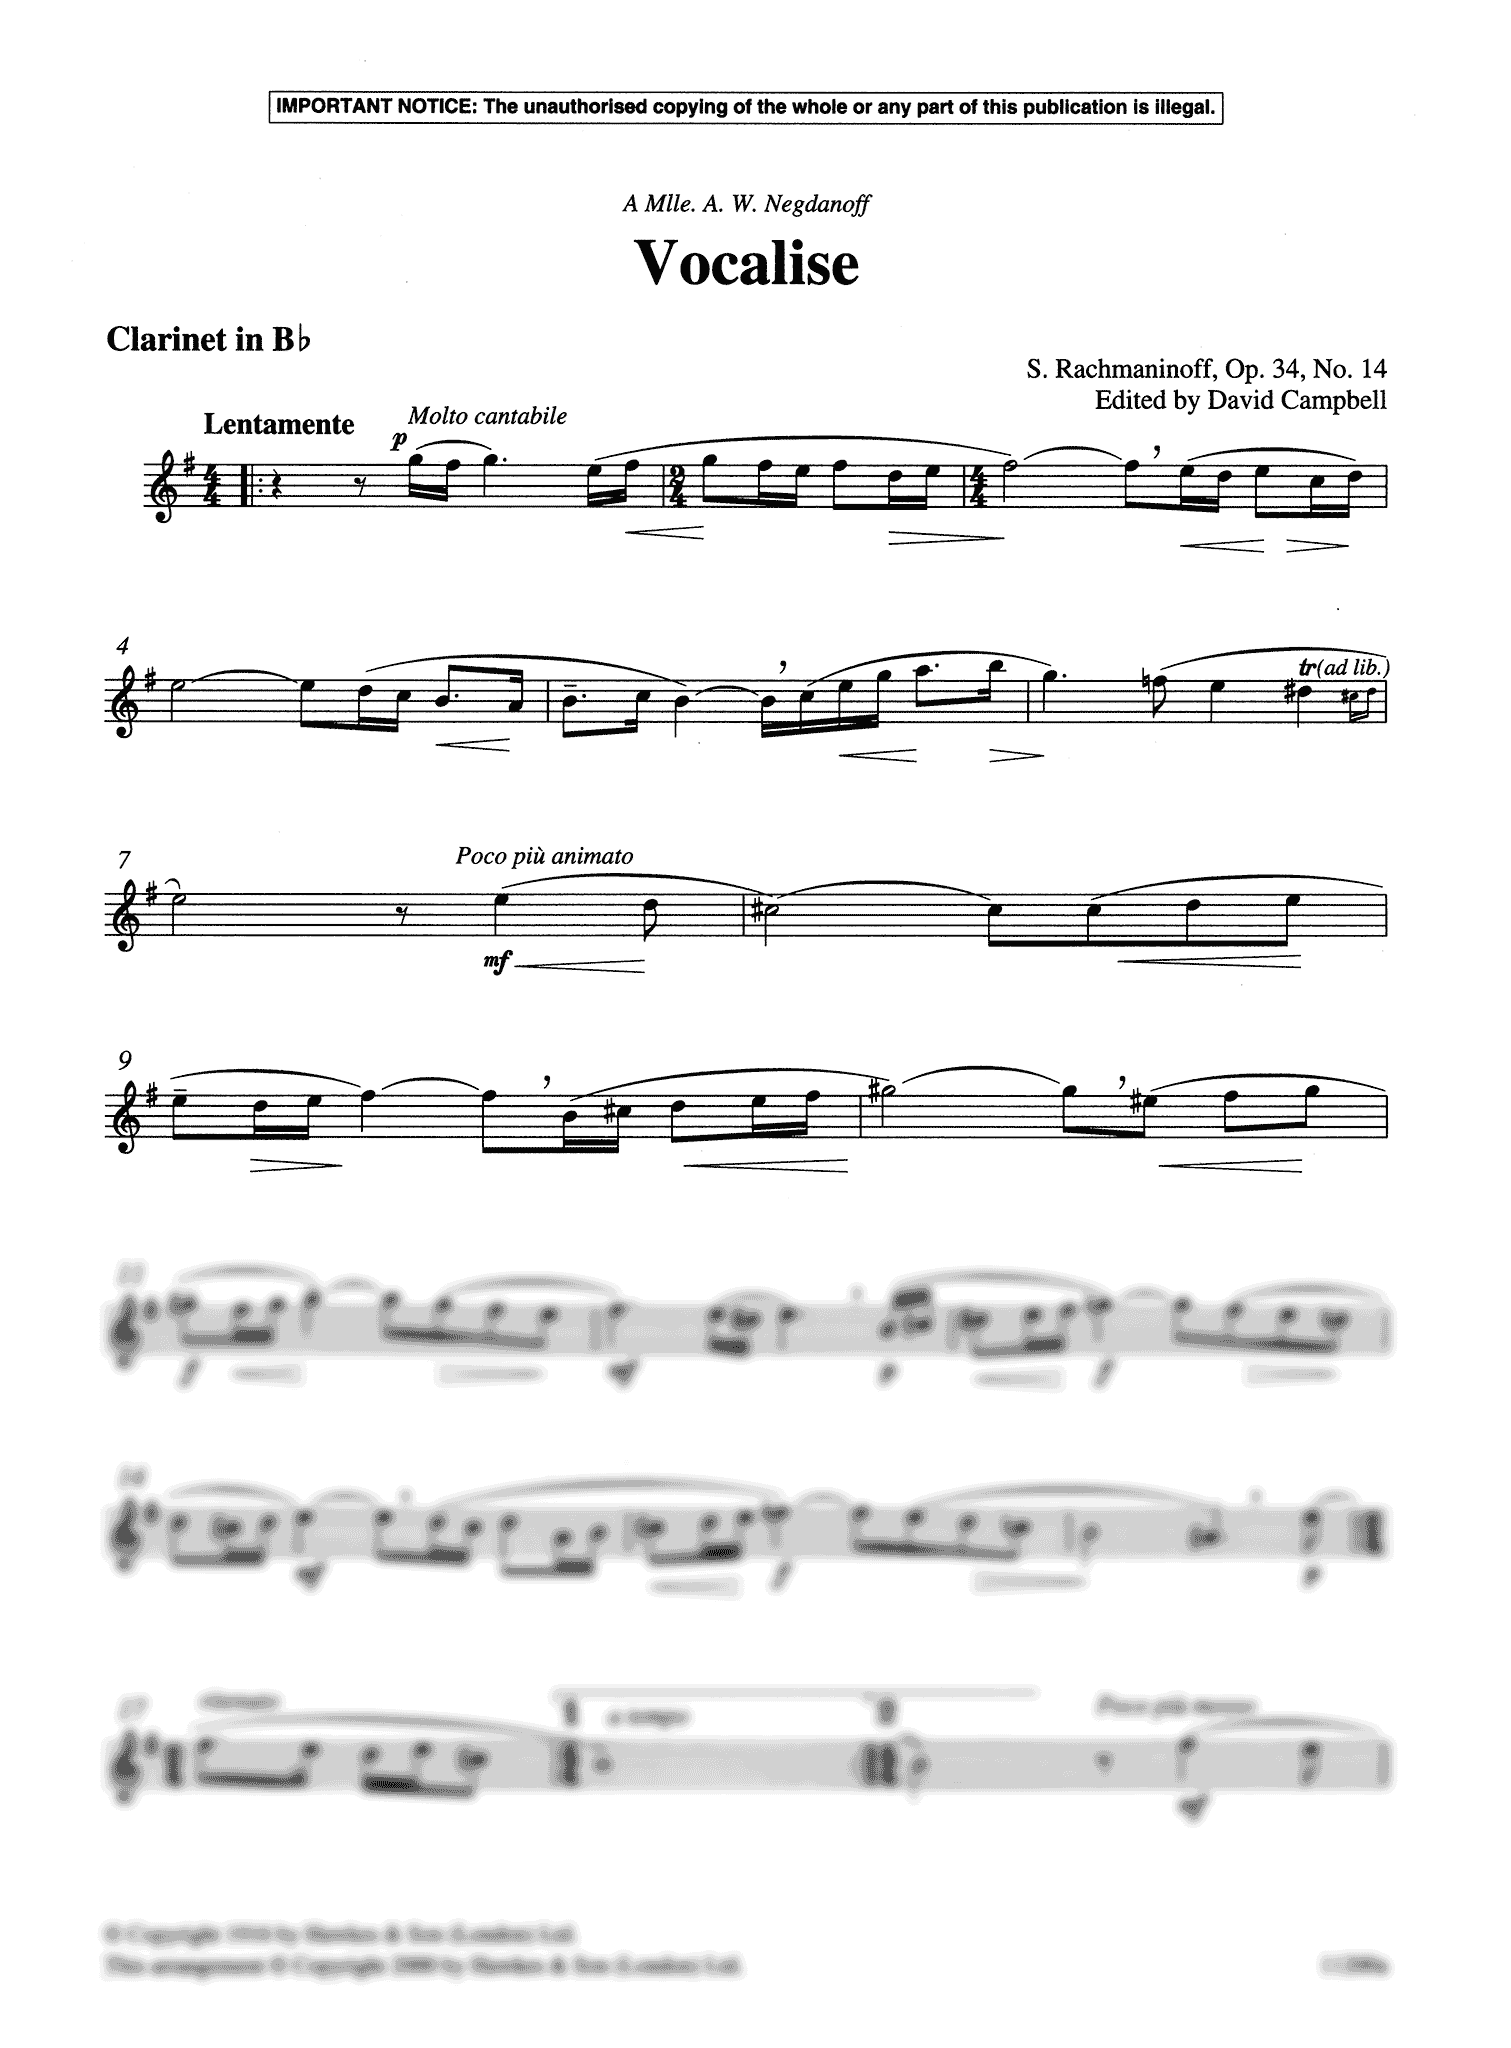 Rachmaninoff Vocalise clarinet part